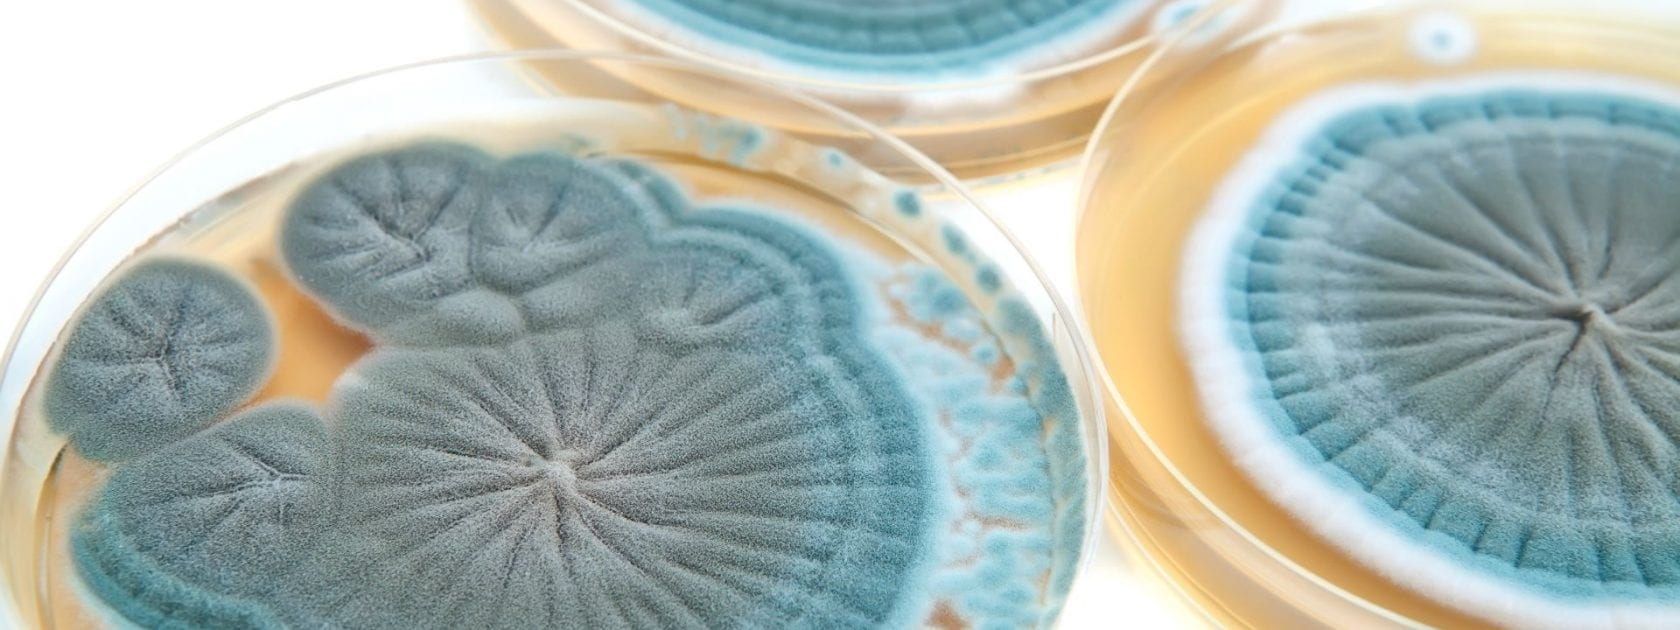 Petri dish with fungi